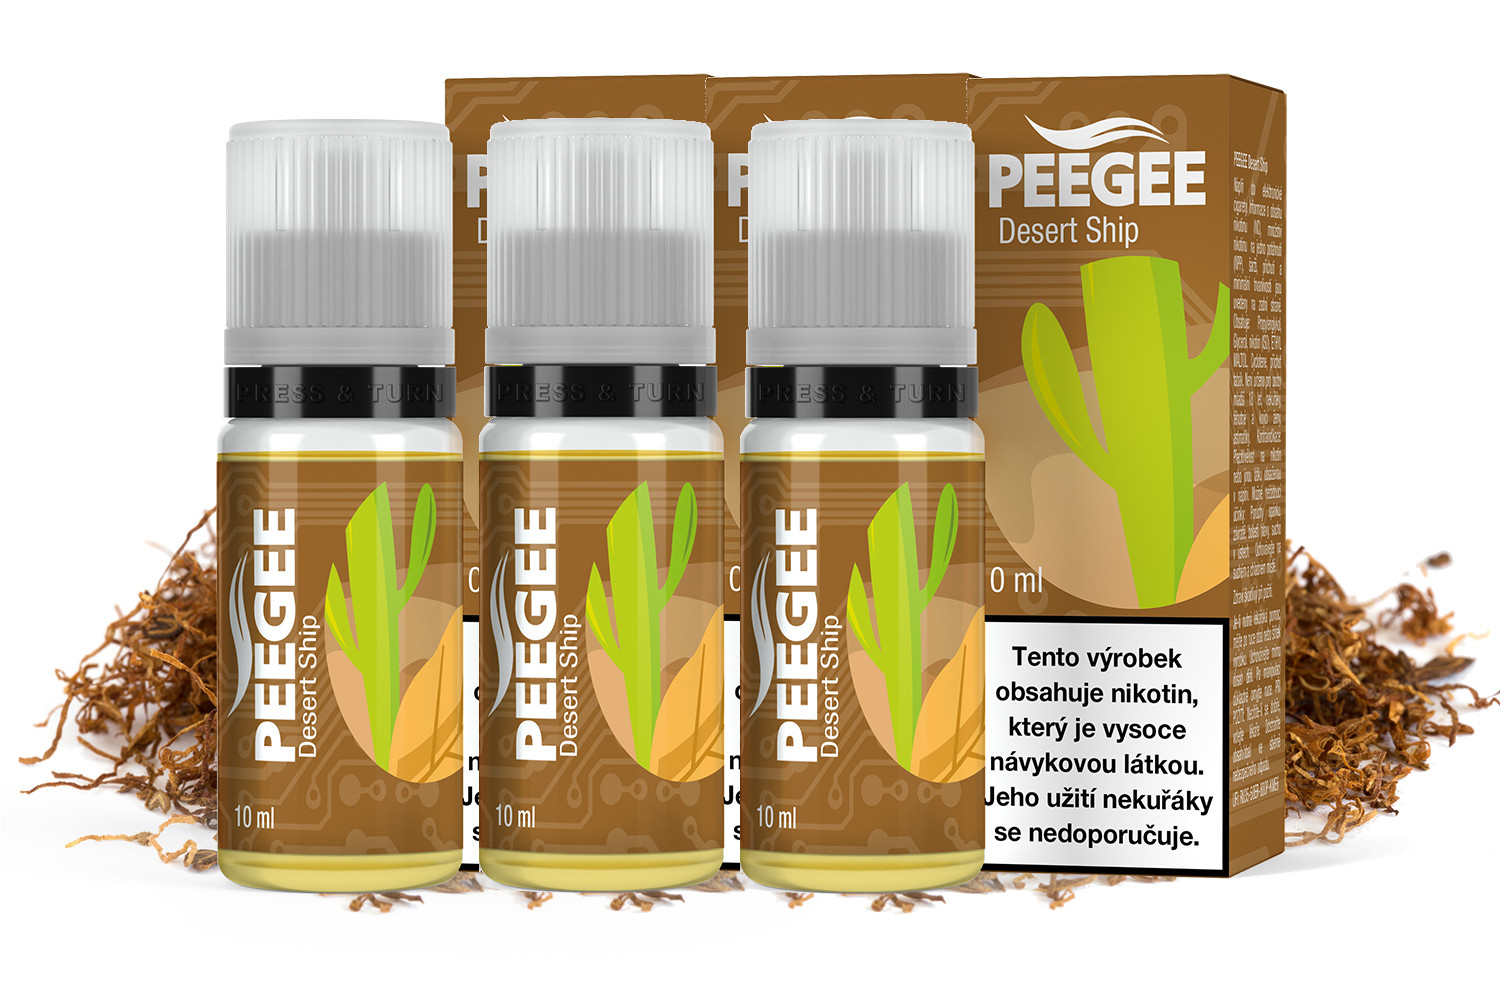 PEEGEE - Desert Ship 3x10ml Obsah nikotinu: 6mg